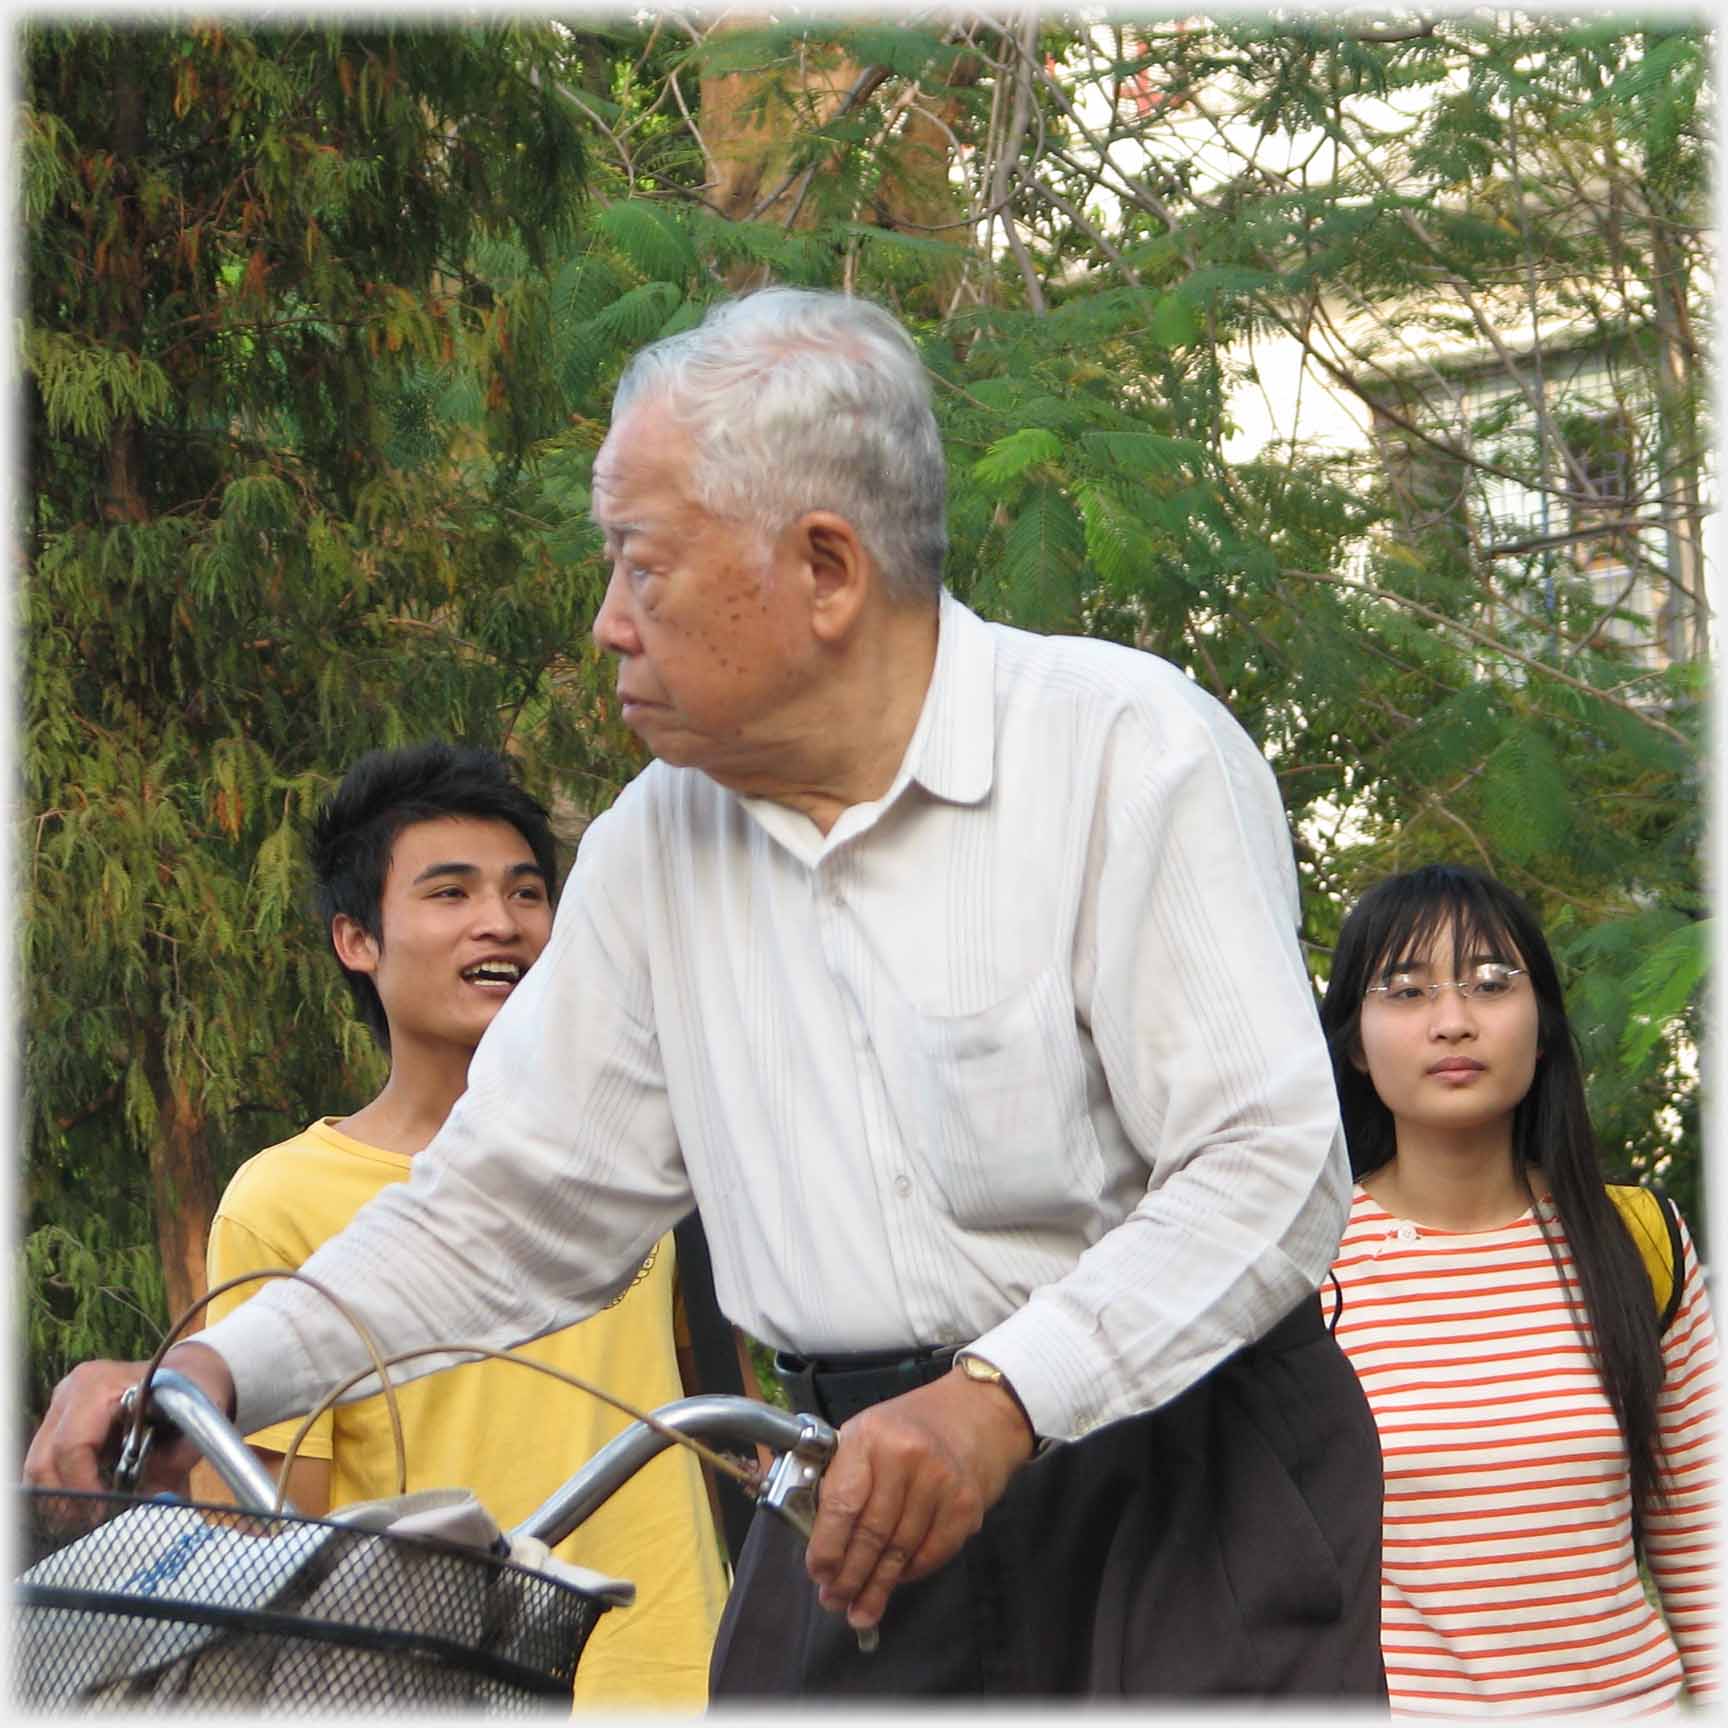 Older man wheeling bike followed by young couple.